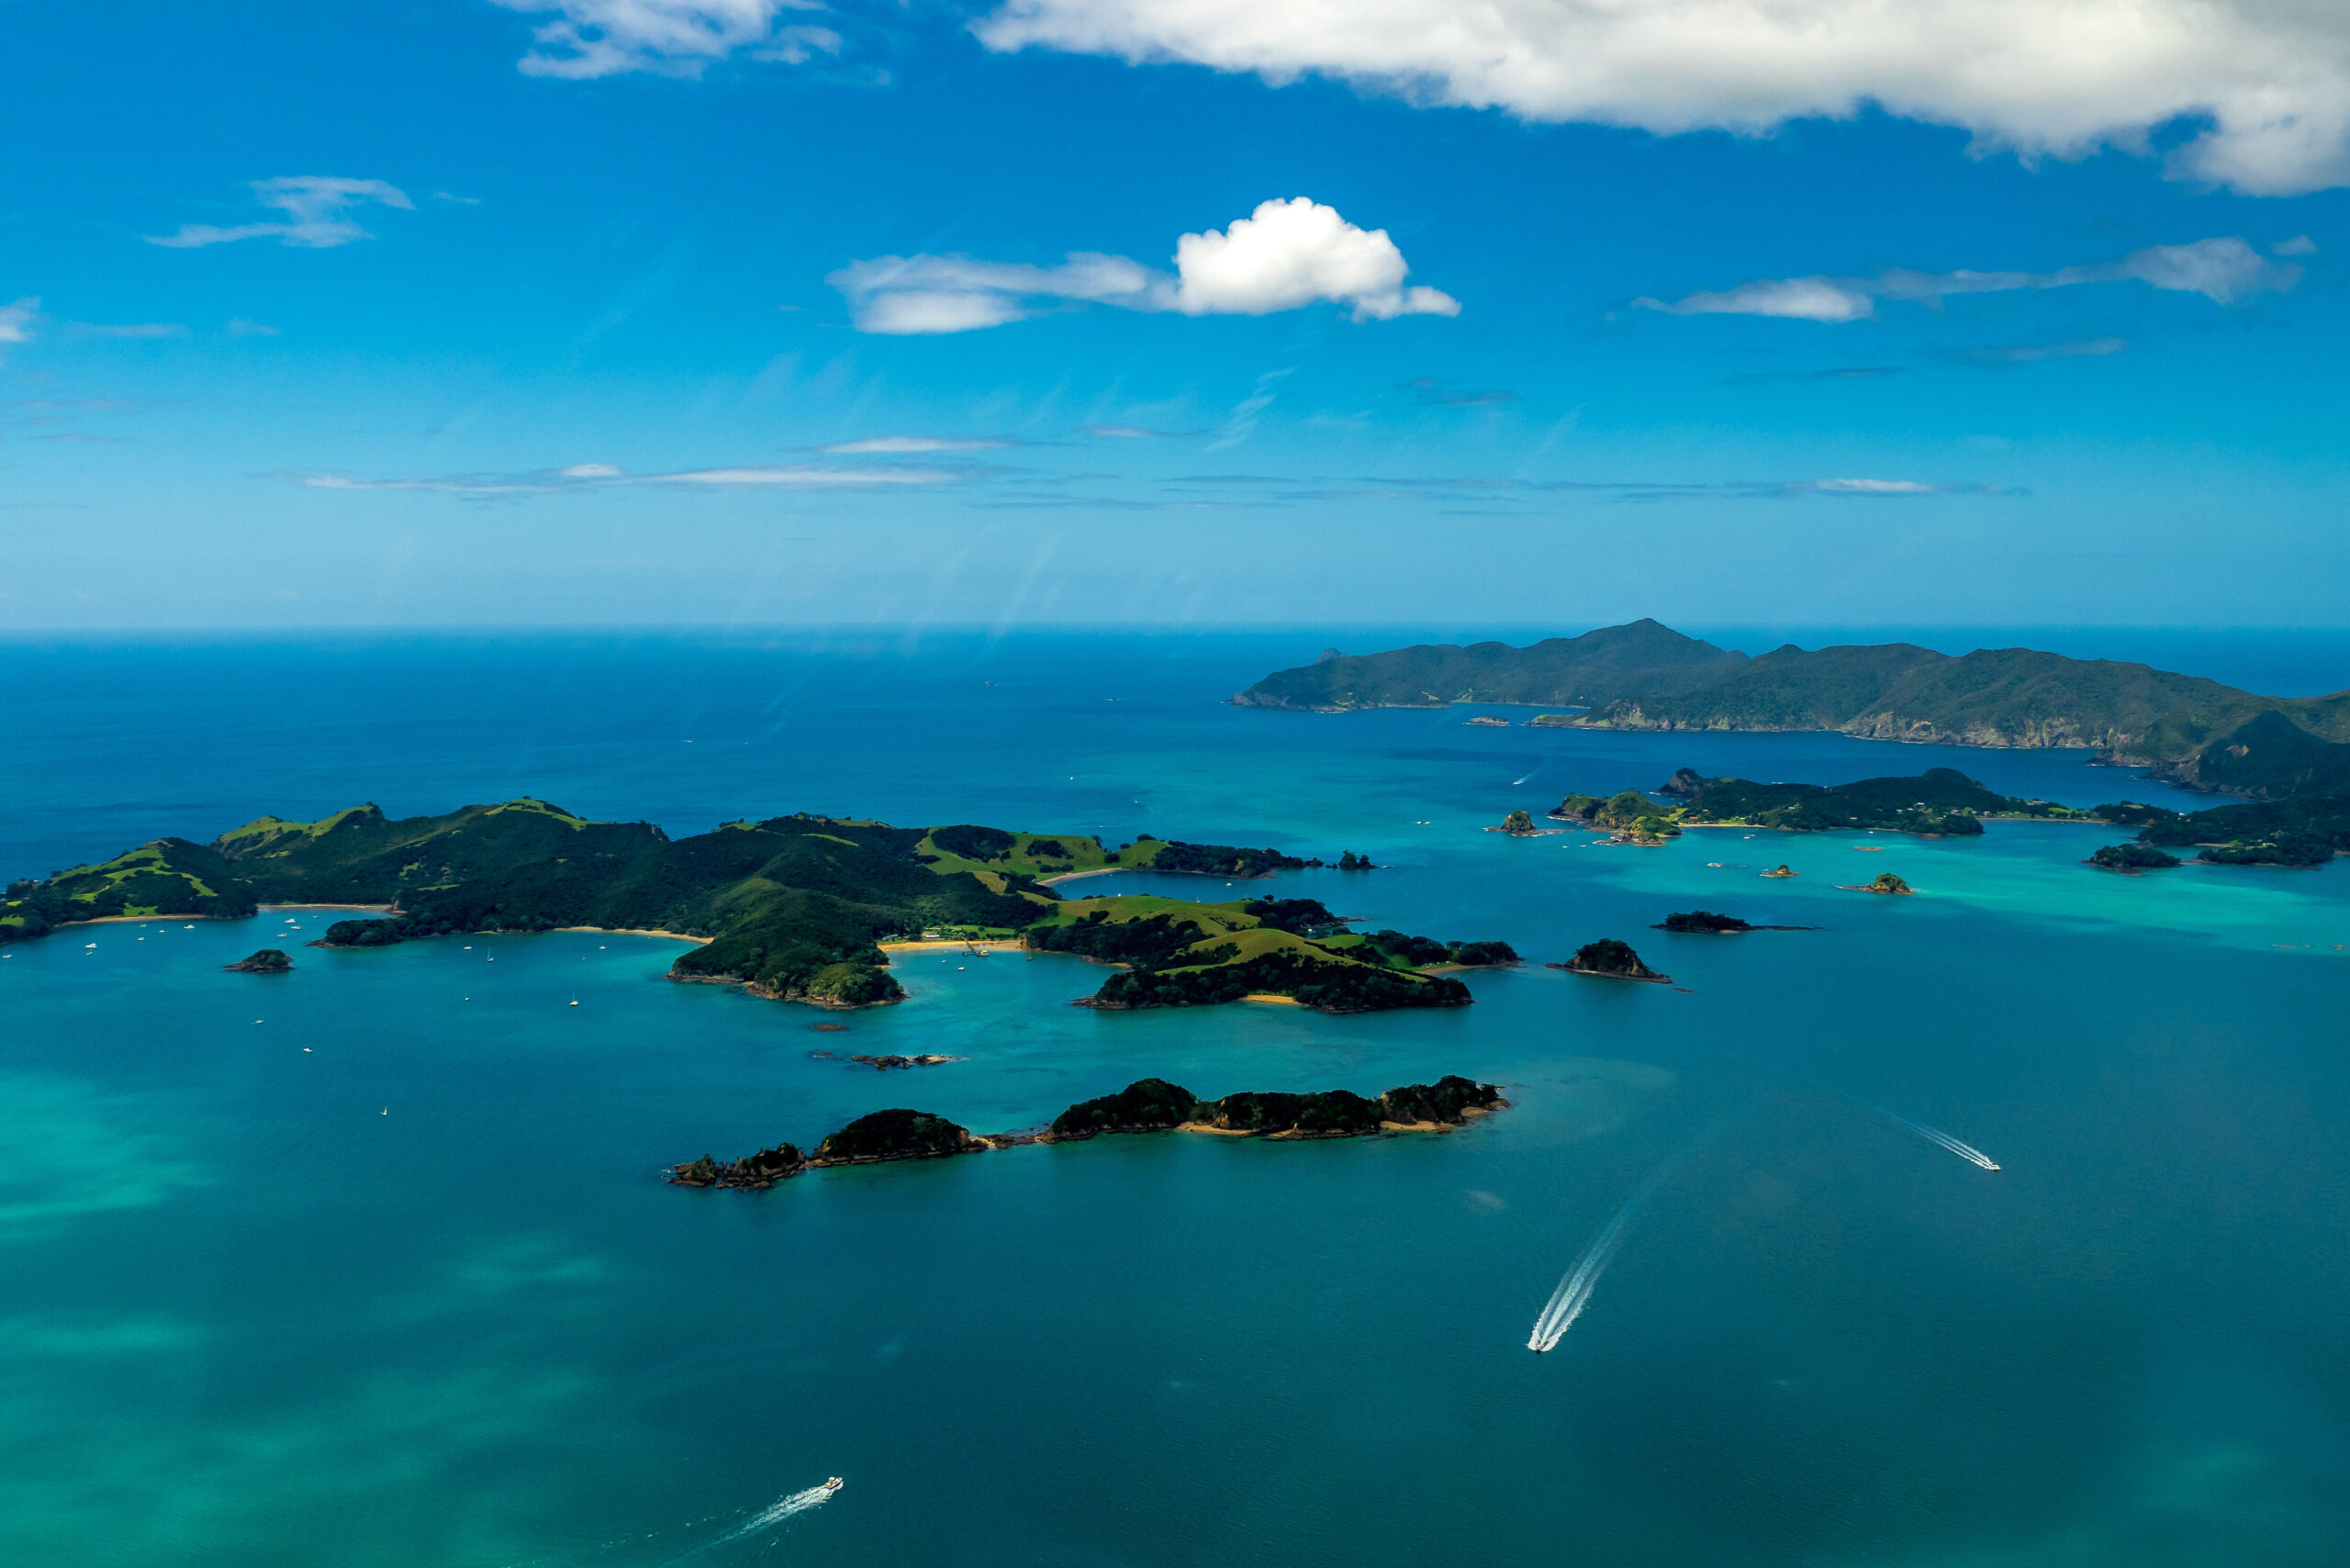 Bay of Islands in New Zealand